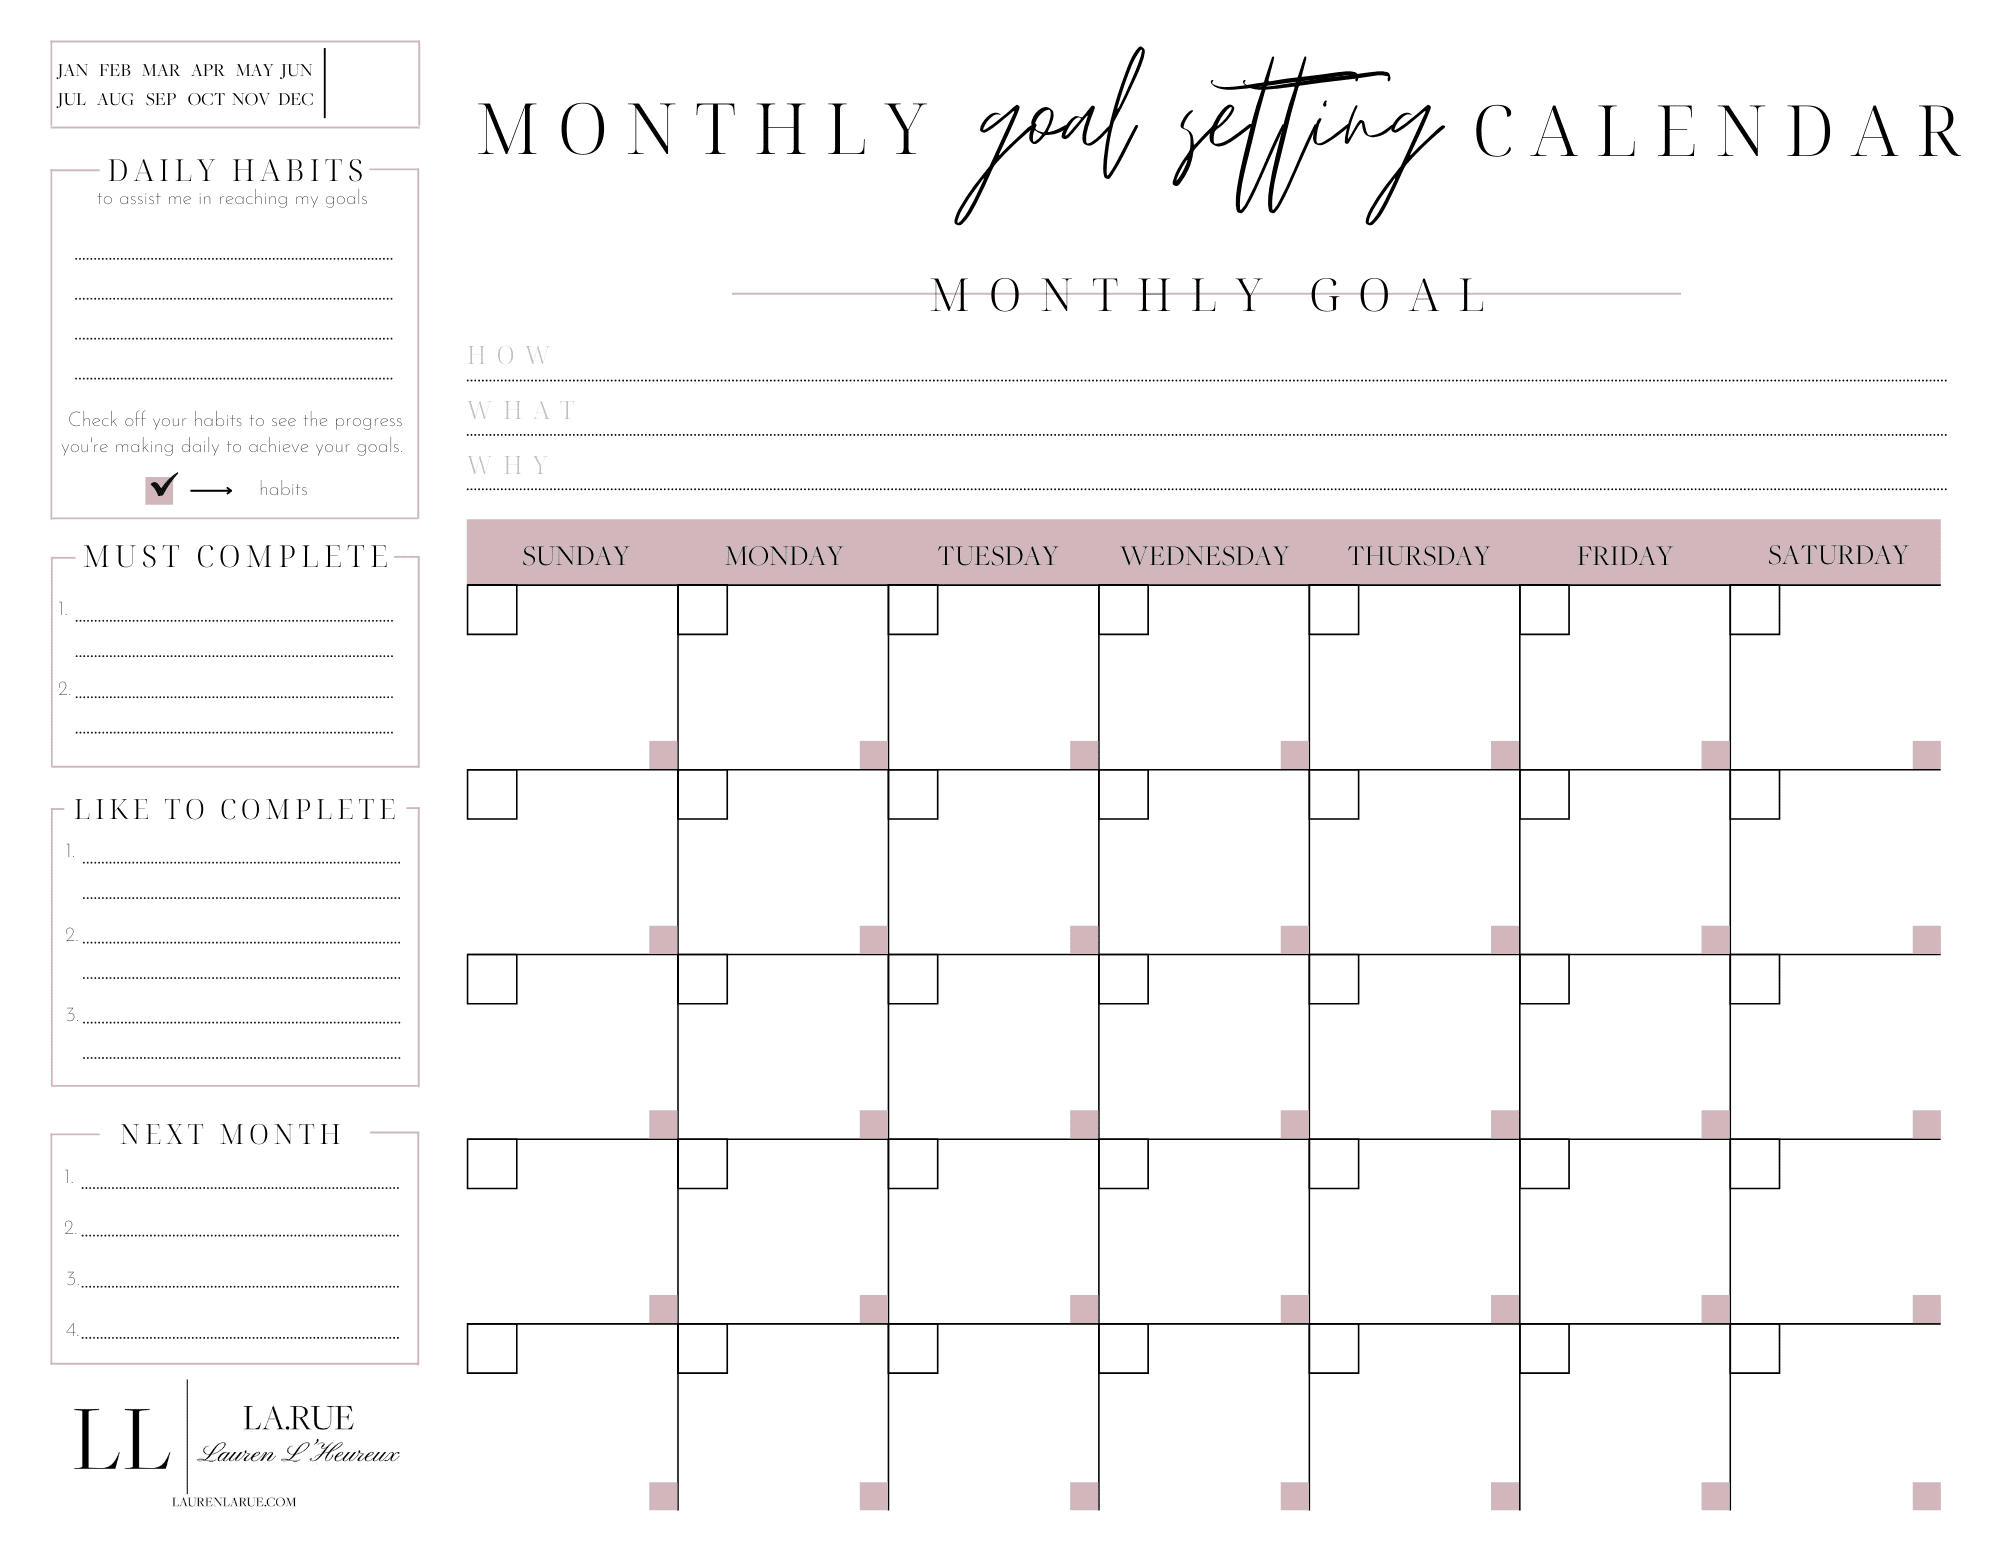 The Monthly Goal Calendar Freebie Set Intentional Goals! La.Rue